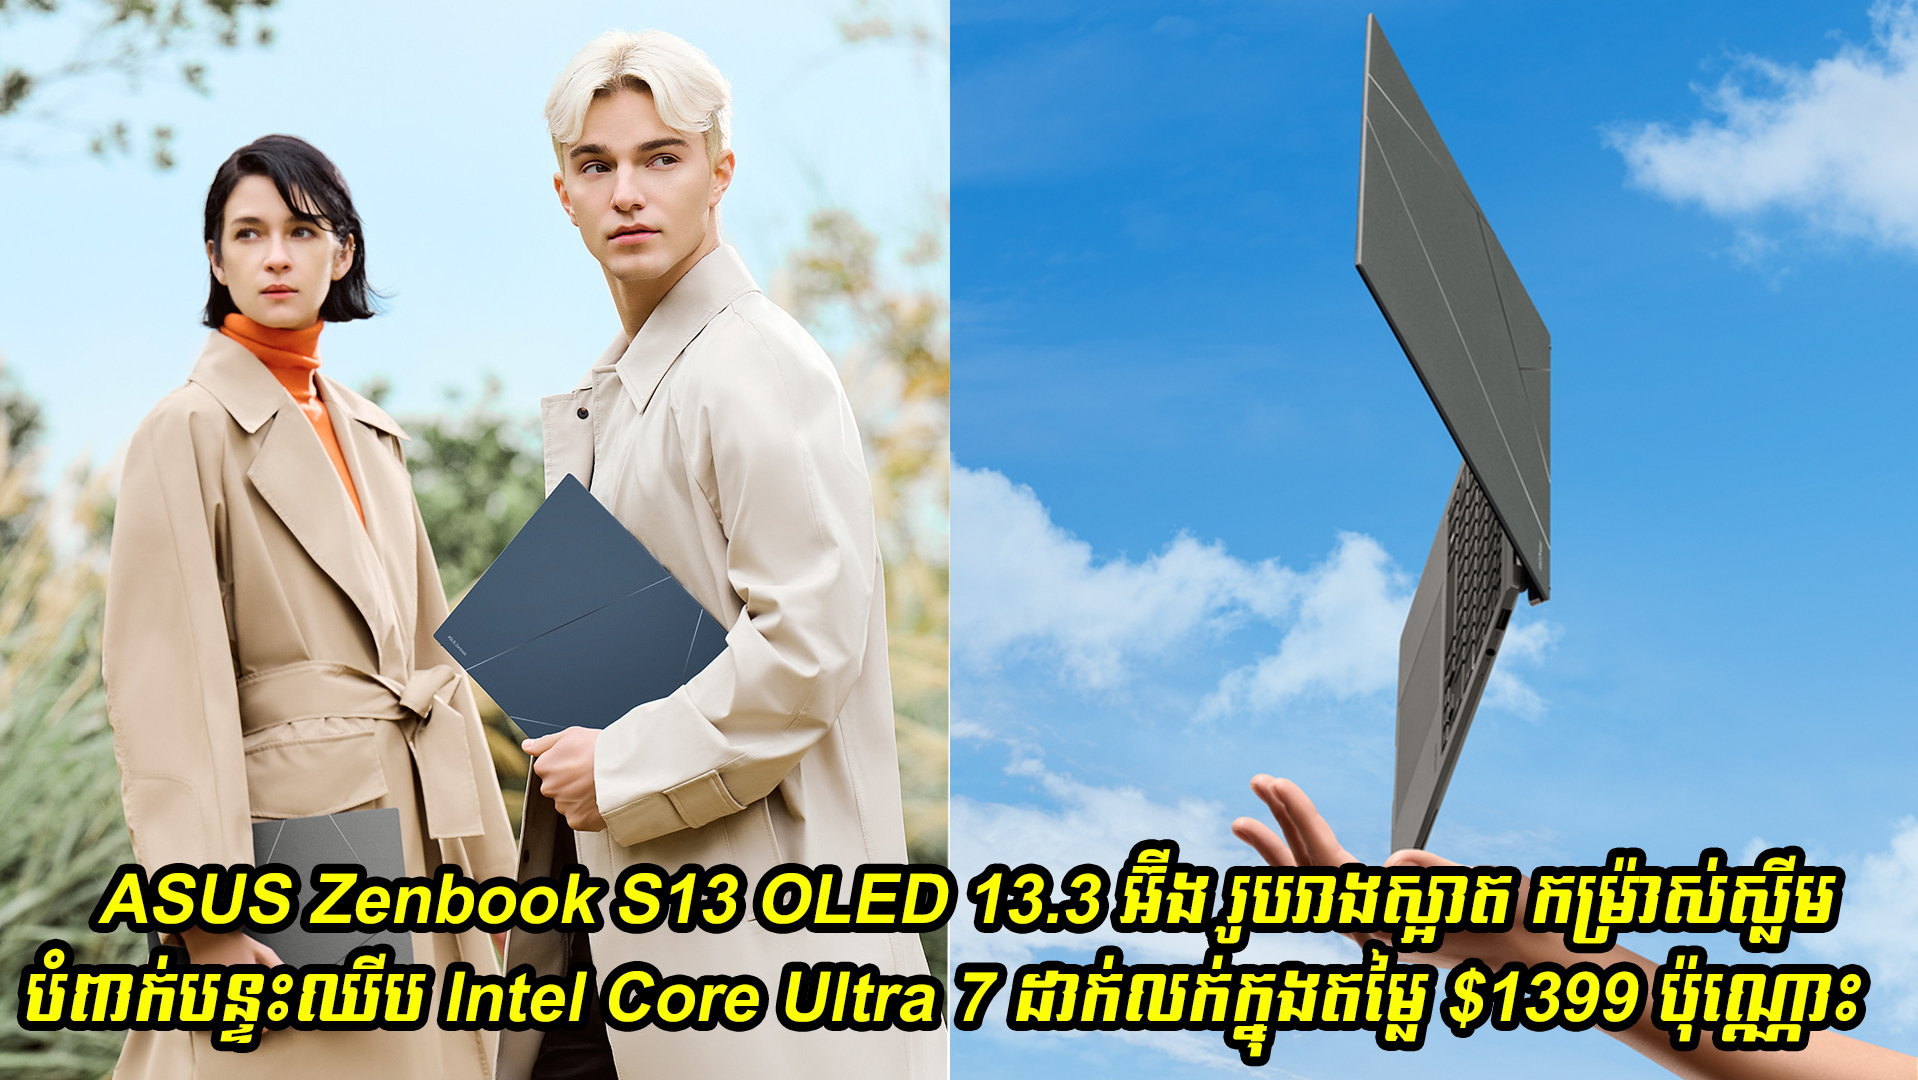 ASUS Zenbook S13 OLED 13.3 អ៊ីង រូបរាងស្អាត កម្រ់ាស់ស្លីម បំពាក់នូវបន្ទះឈីប Intel Core Ultra 7 ដាក់លក់ក្នុងតម្លៃ $1399 ប៉ុណ្ណោះ 